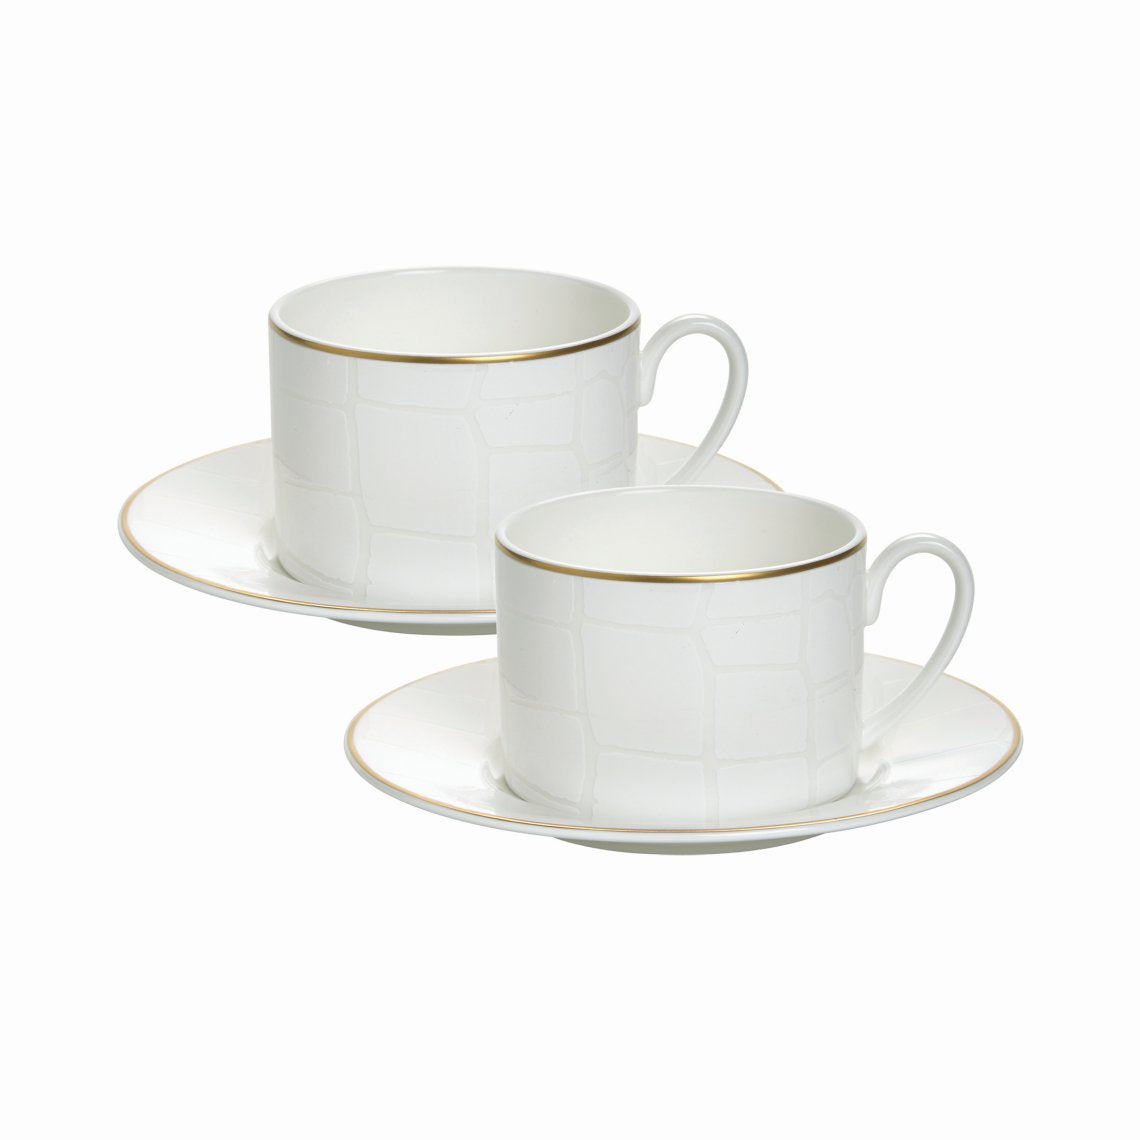 Alligator white Tea cup & Saucer, Set of 2